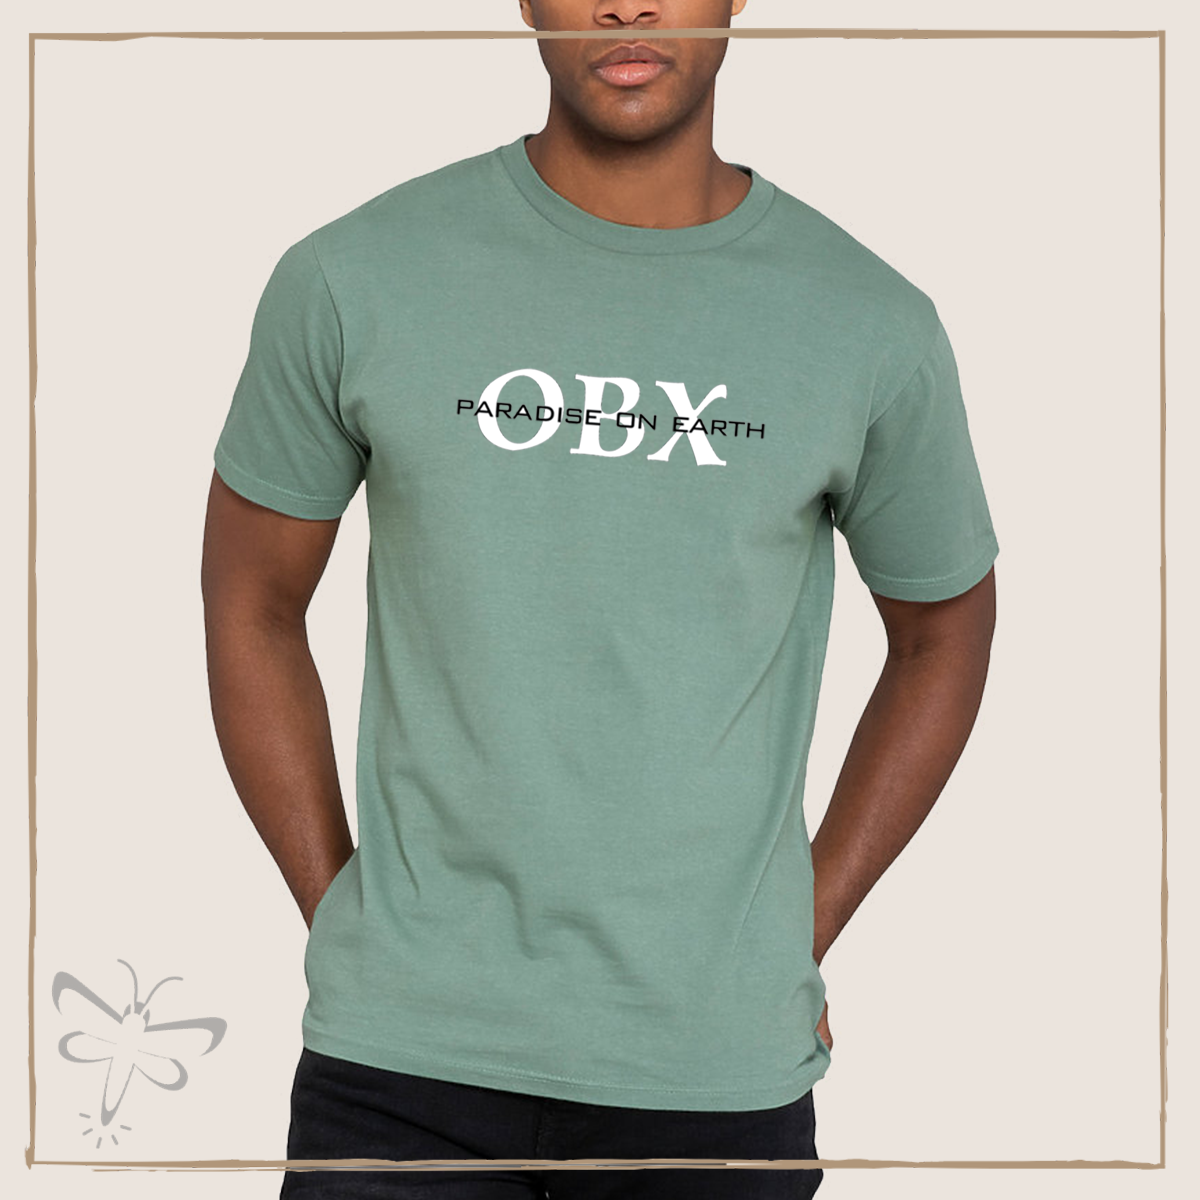 Obx Paradise On Earth T-Shirt S / Seafoam Full